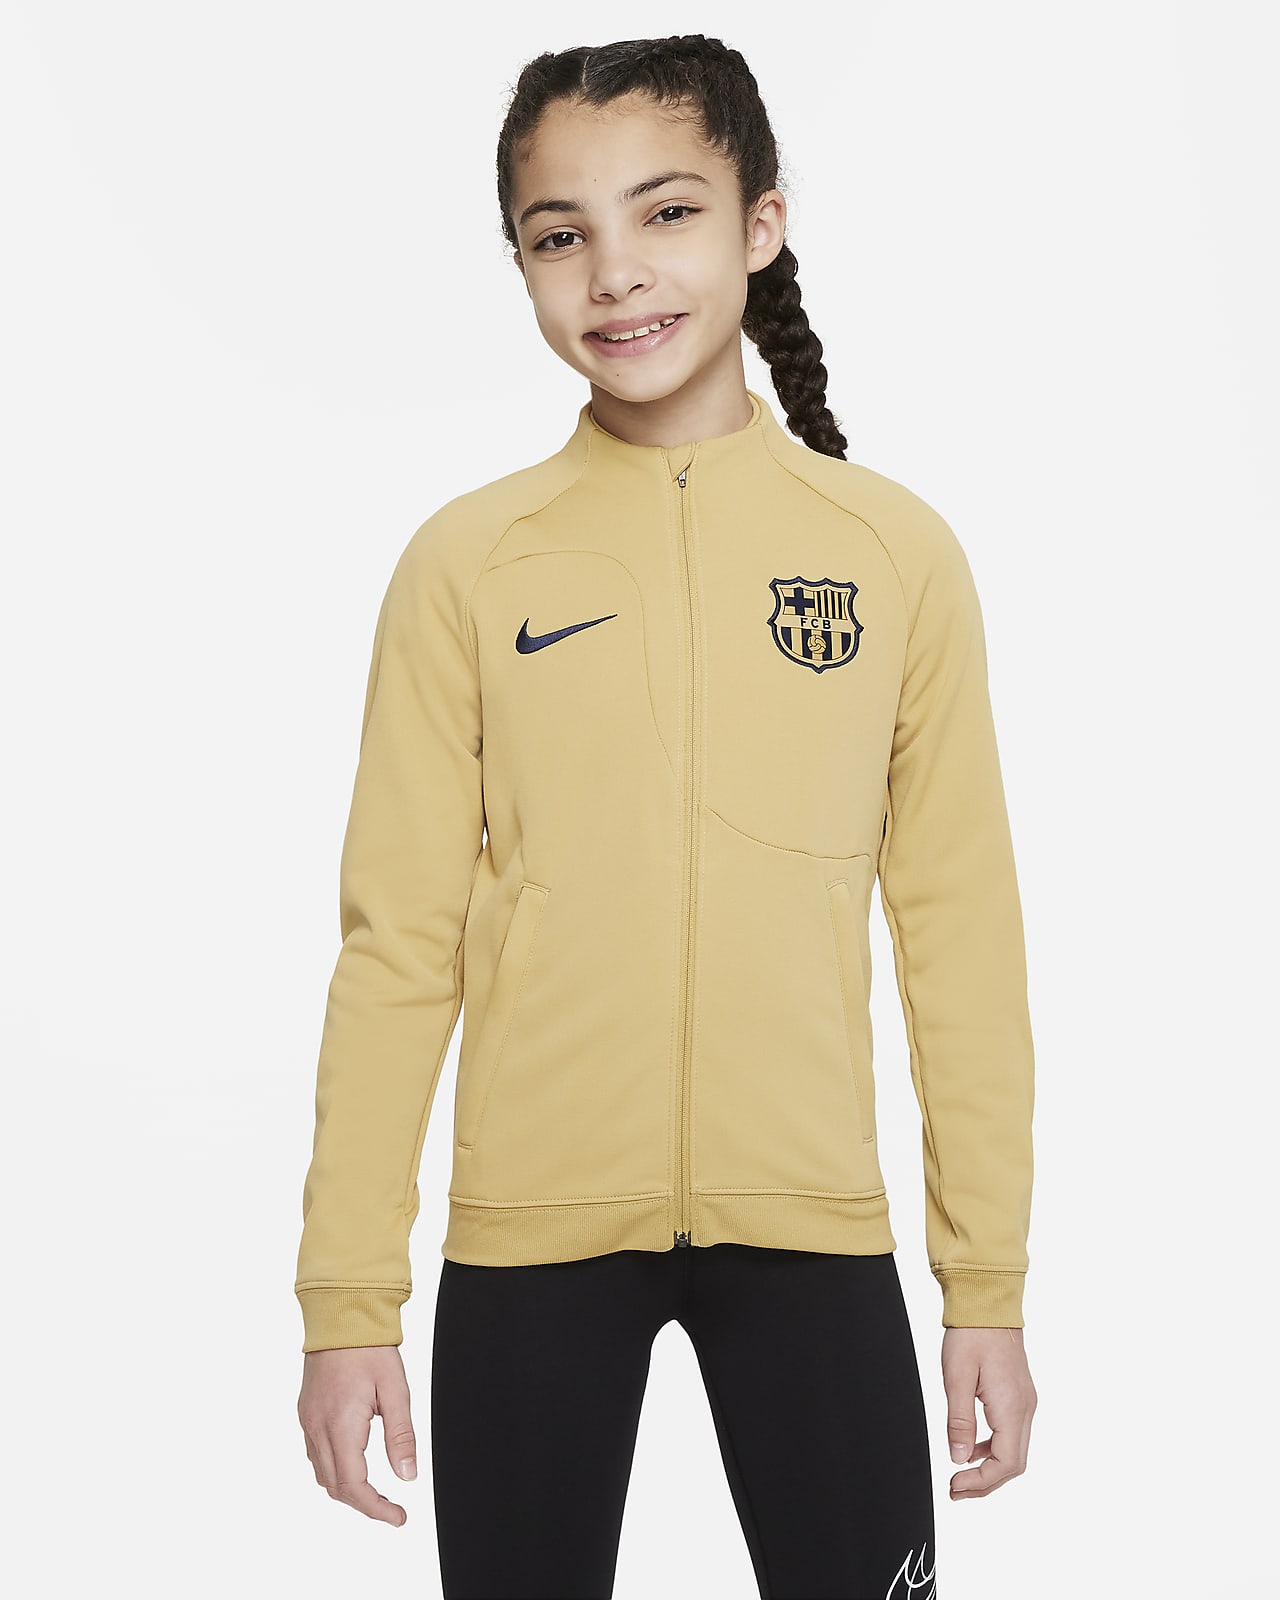 Permanente golpear Confrontar FC Barcelona Academy Pro Chaqueta de fútbol Nike - Niño/a. Nike ES